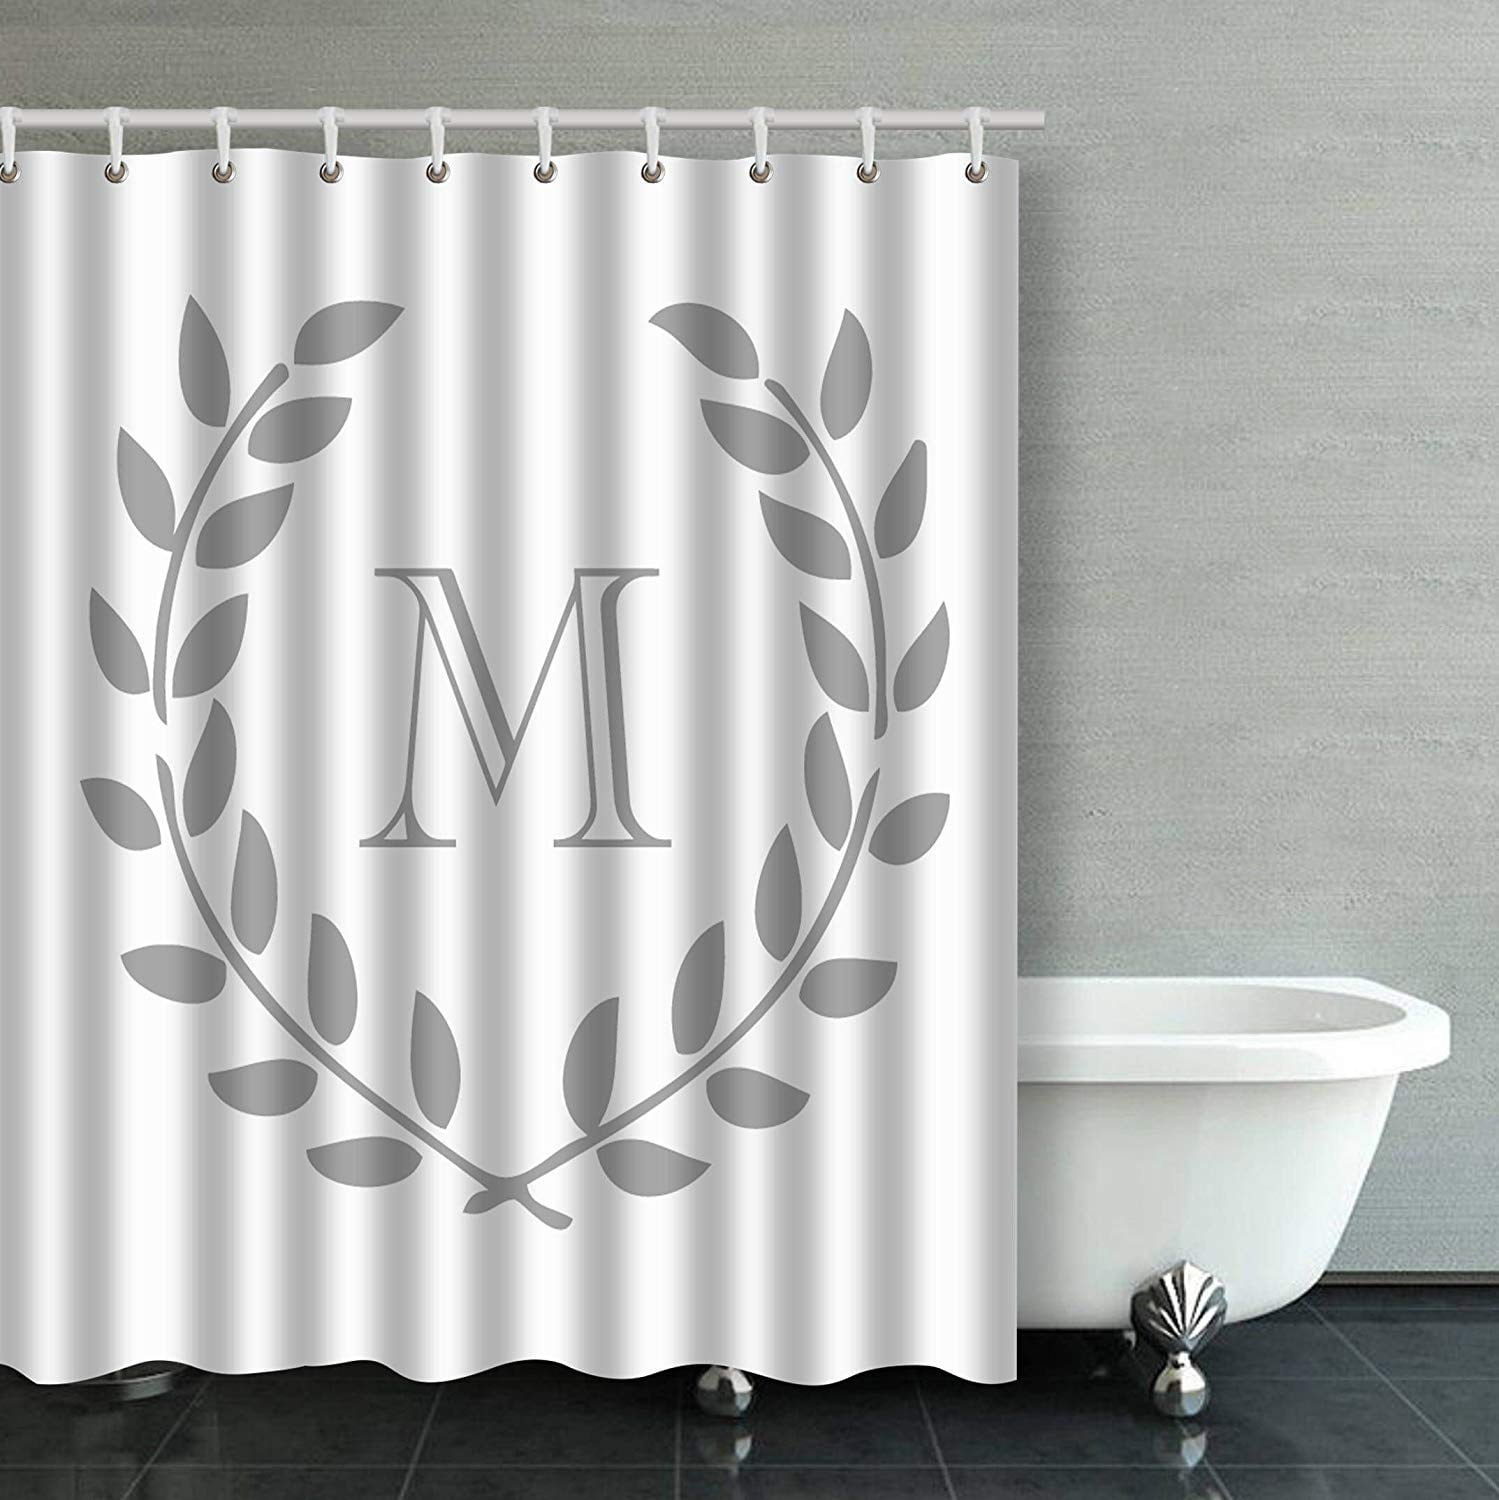 Artjia Decors Monogram Bathroom Shower Curtain 60x72 Inches Com